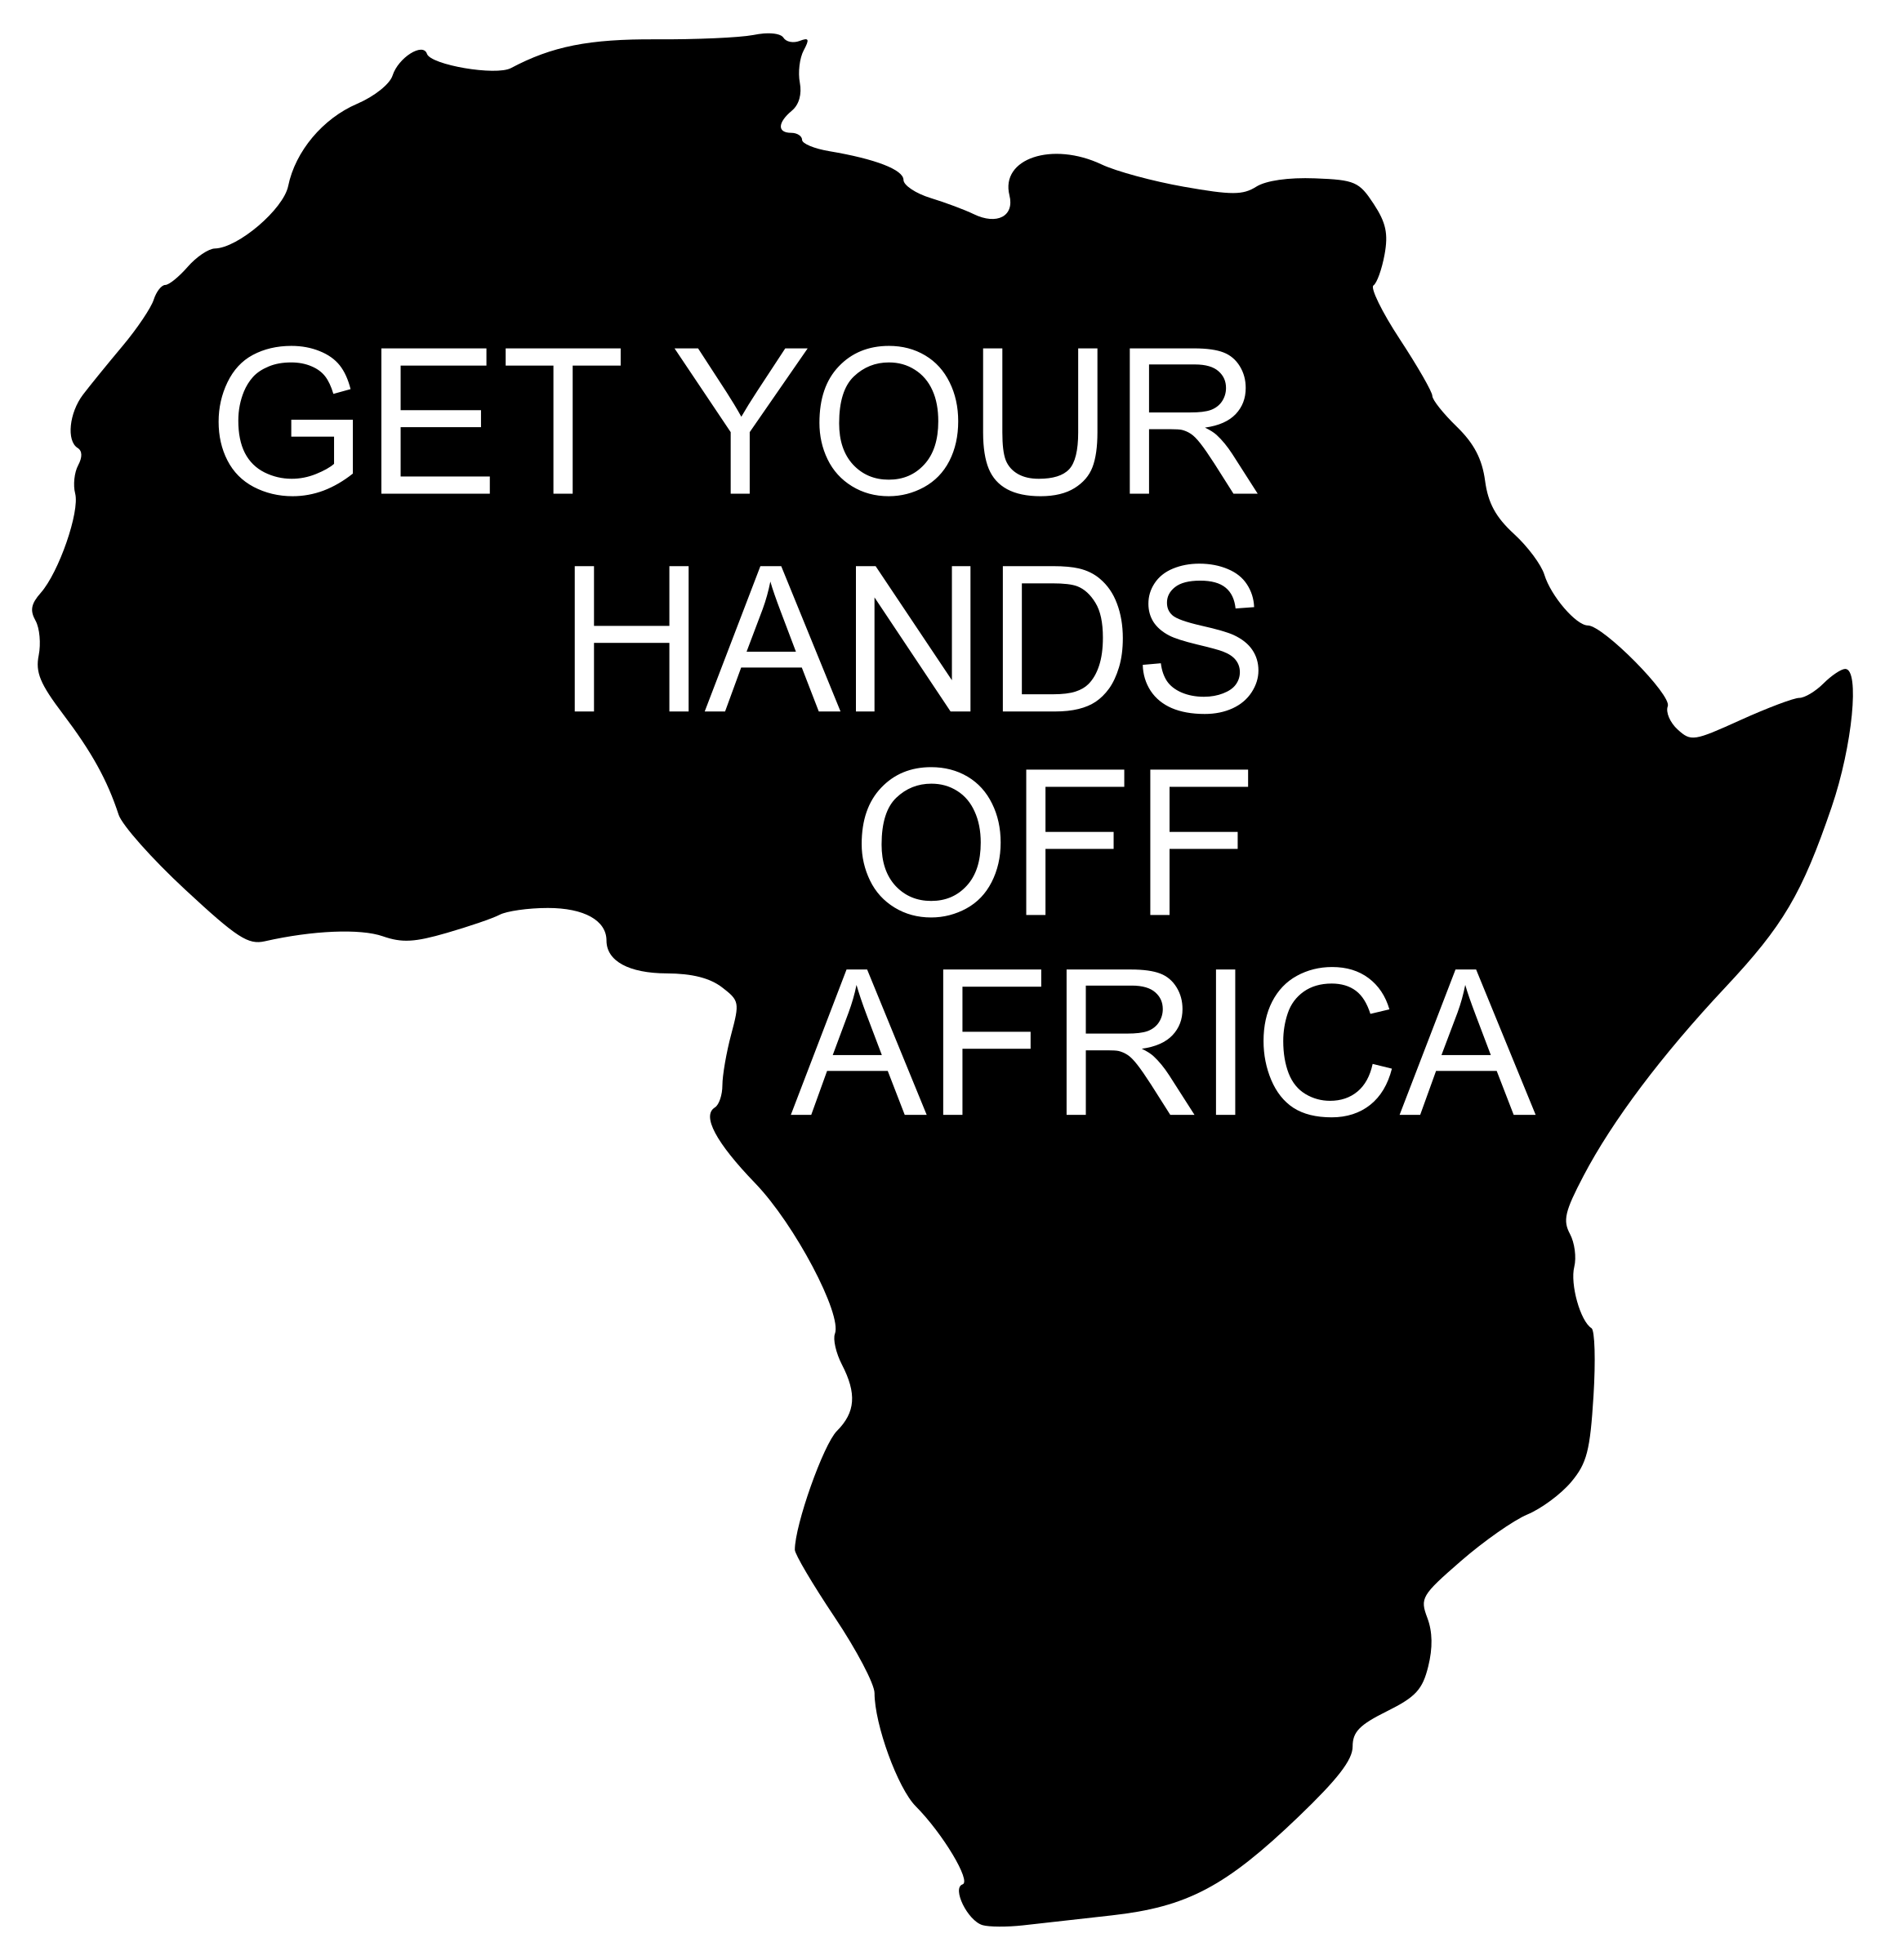 GET YOUR HANDS OFF AFRICA SVG Clip arts